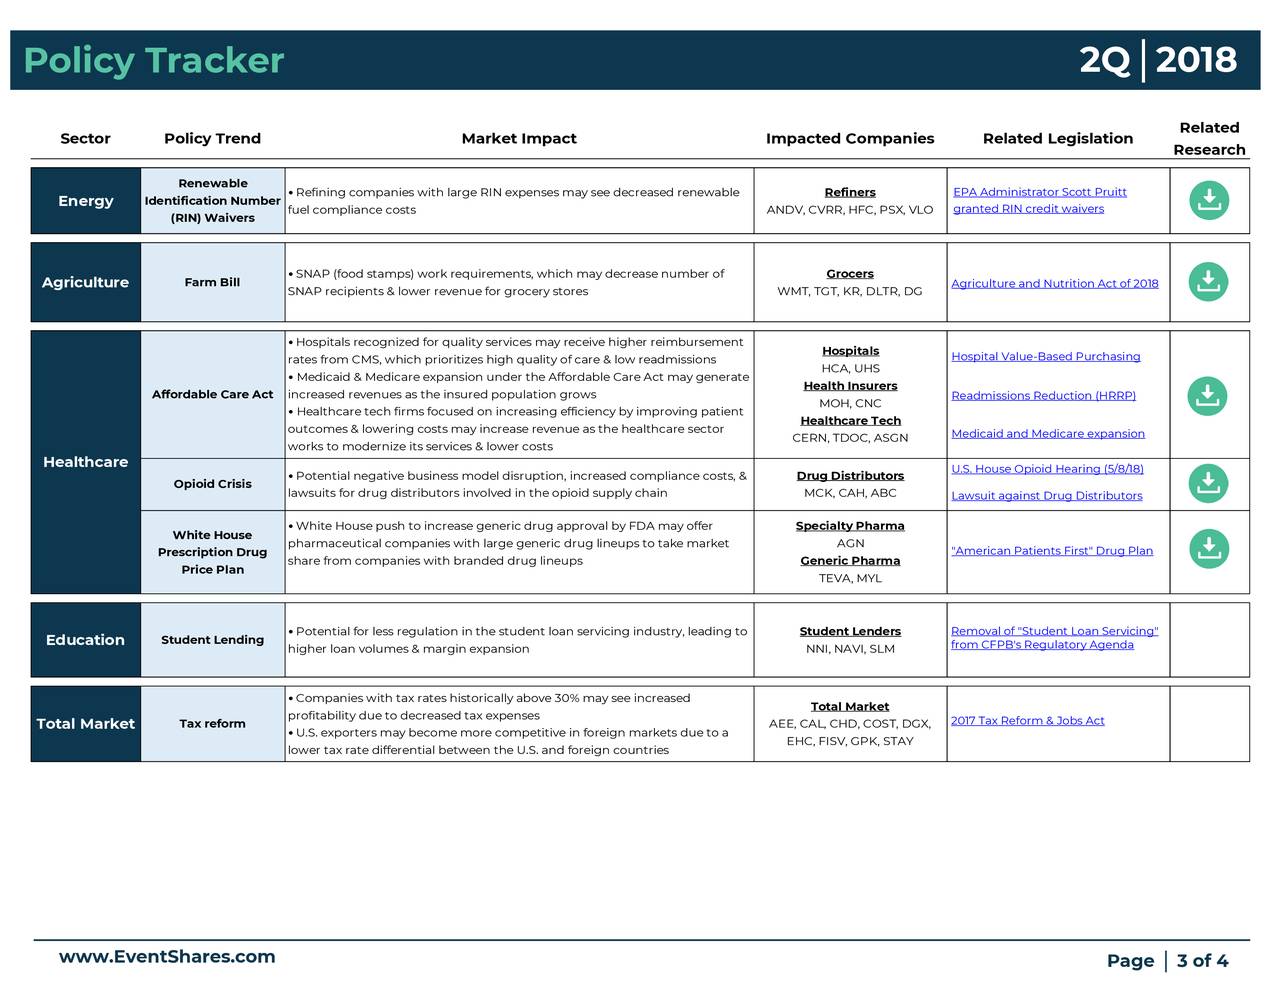 EventShares 2Q'18 Policy Tracker | Seeking Alpha